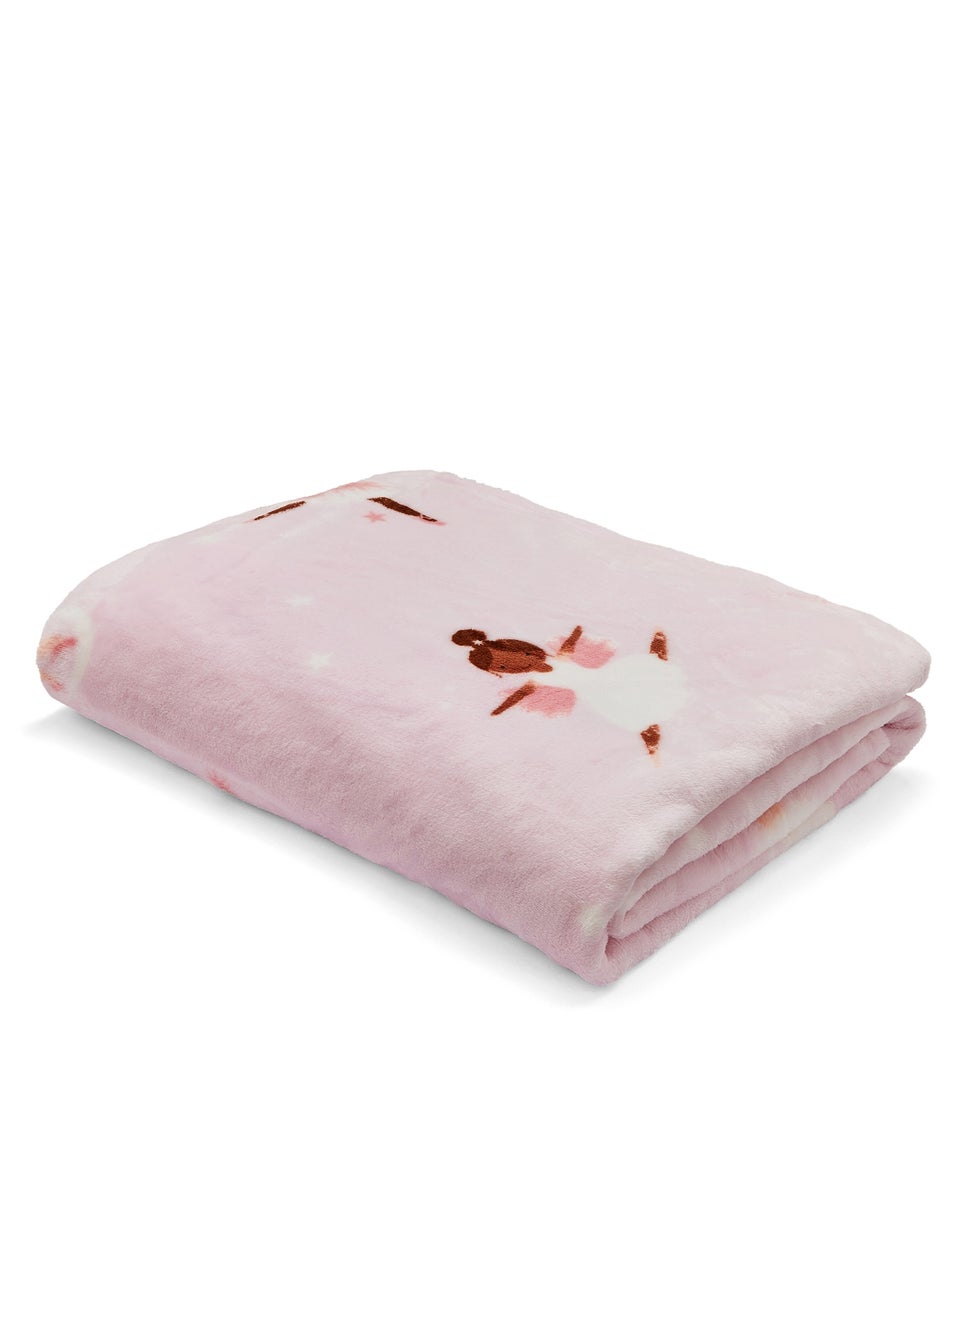 Catherine Lansfield Уютное флисовое одеяло Танцующие феи размером 130x170 см, розовый